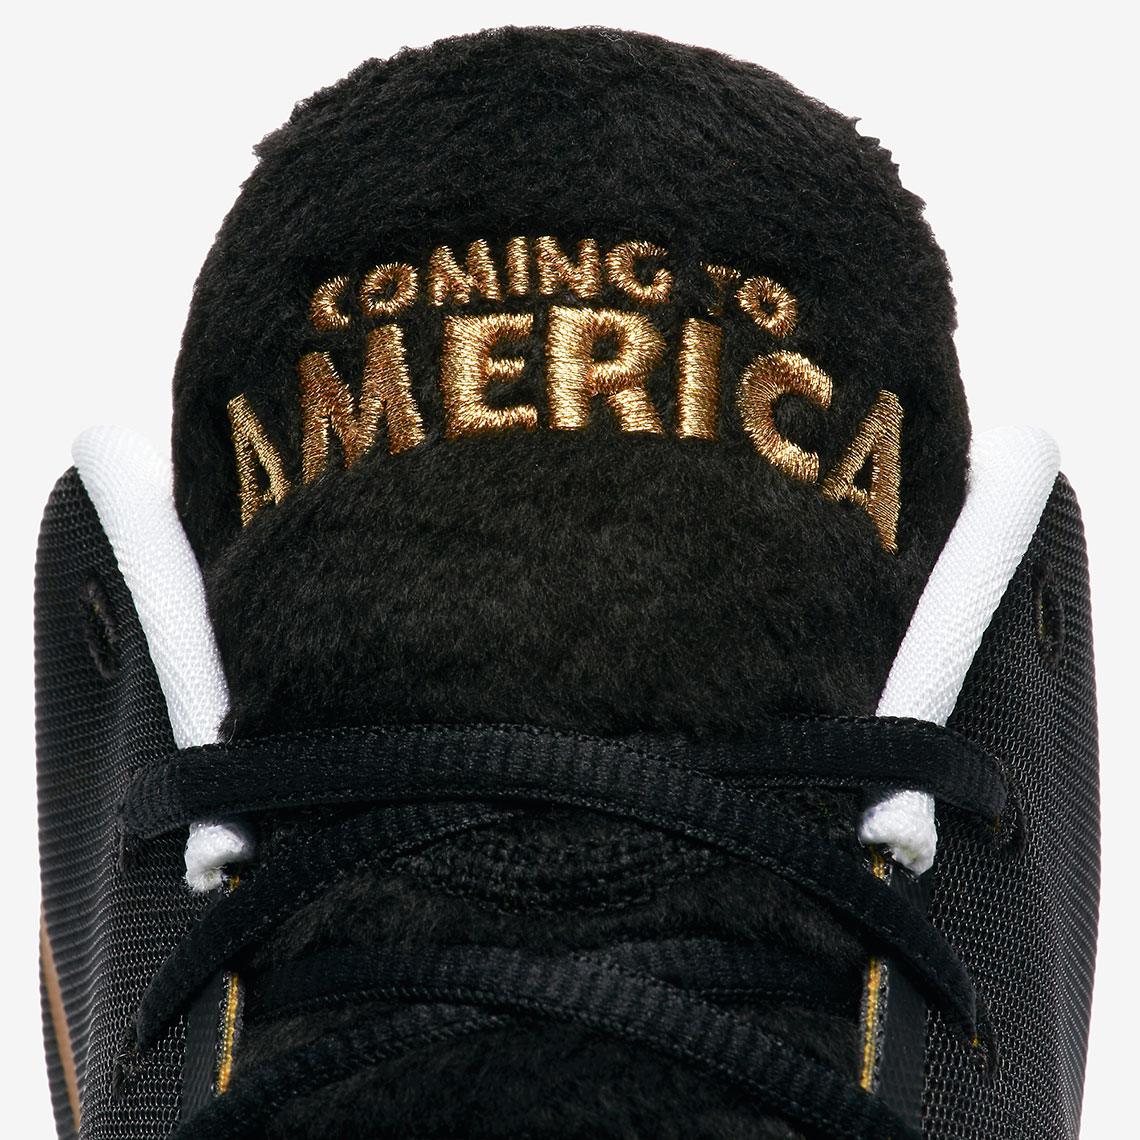 teoría confiar Involucrado Nike Zoom Freak 1 Coming To America BQ5422-900 Store List | SneakerNews.com